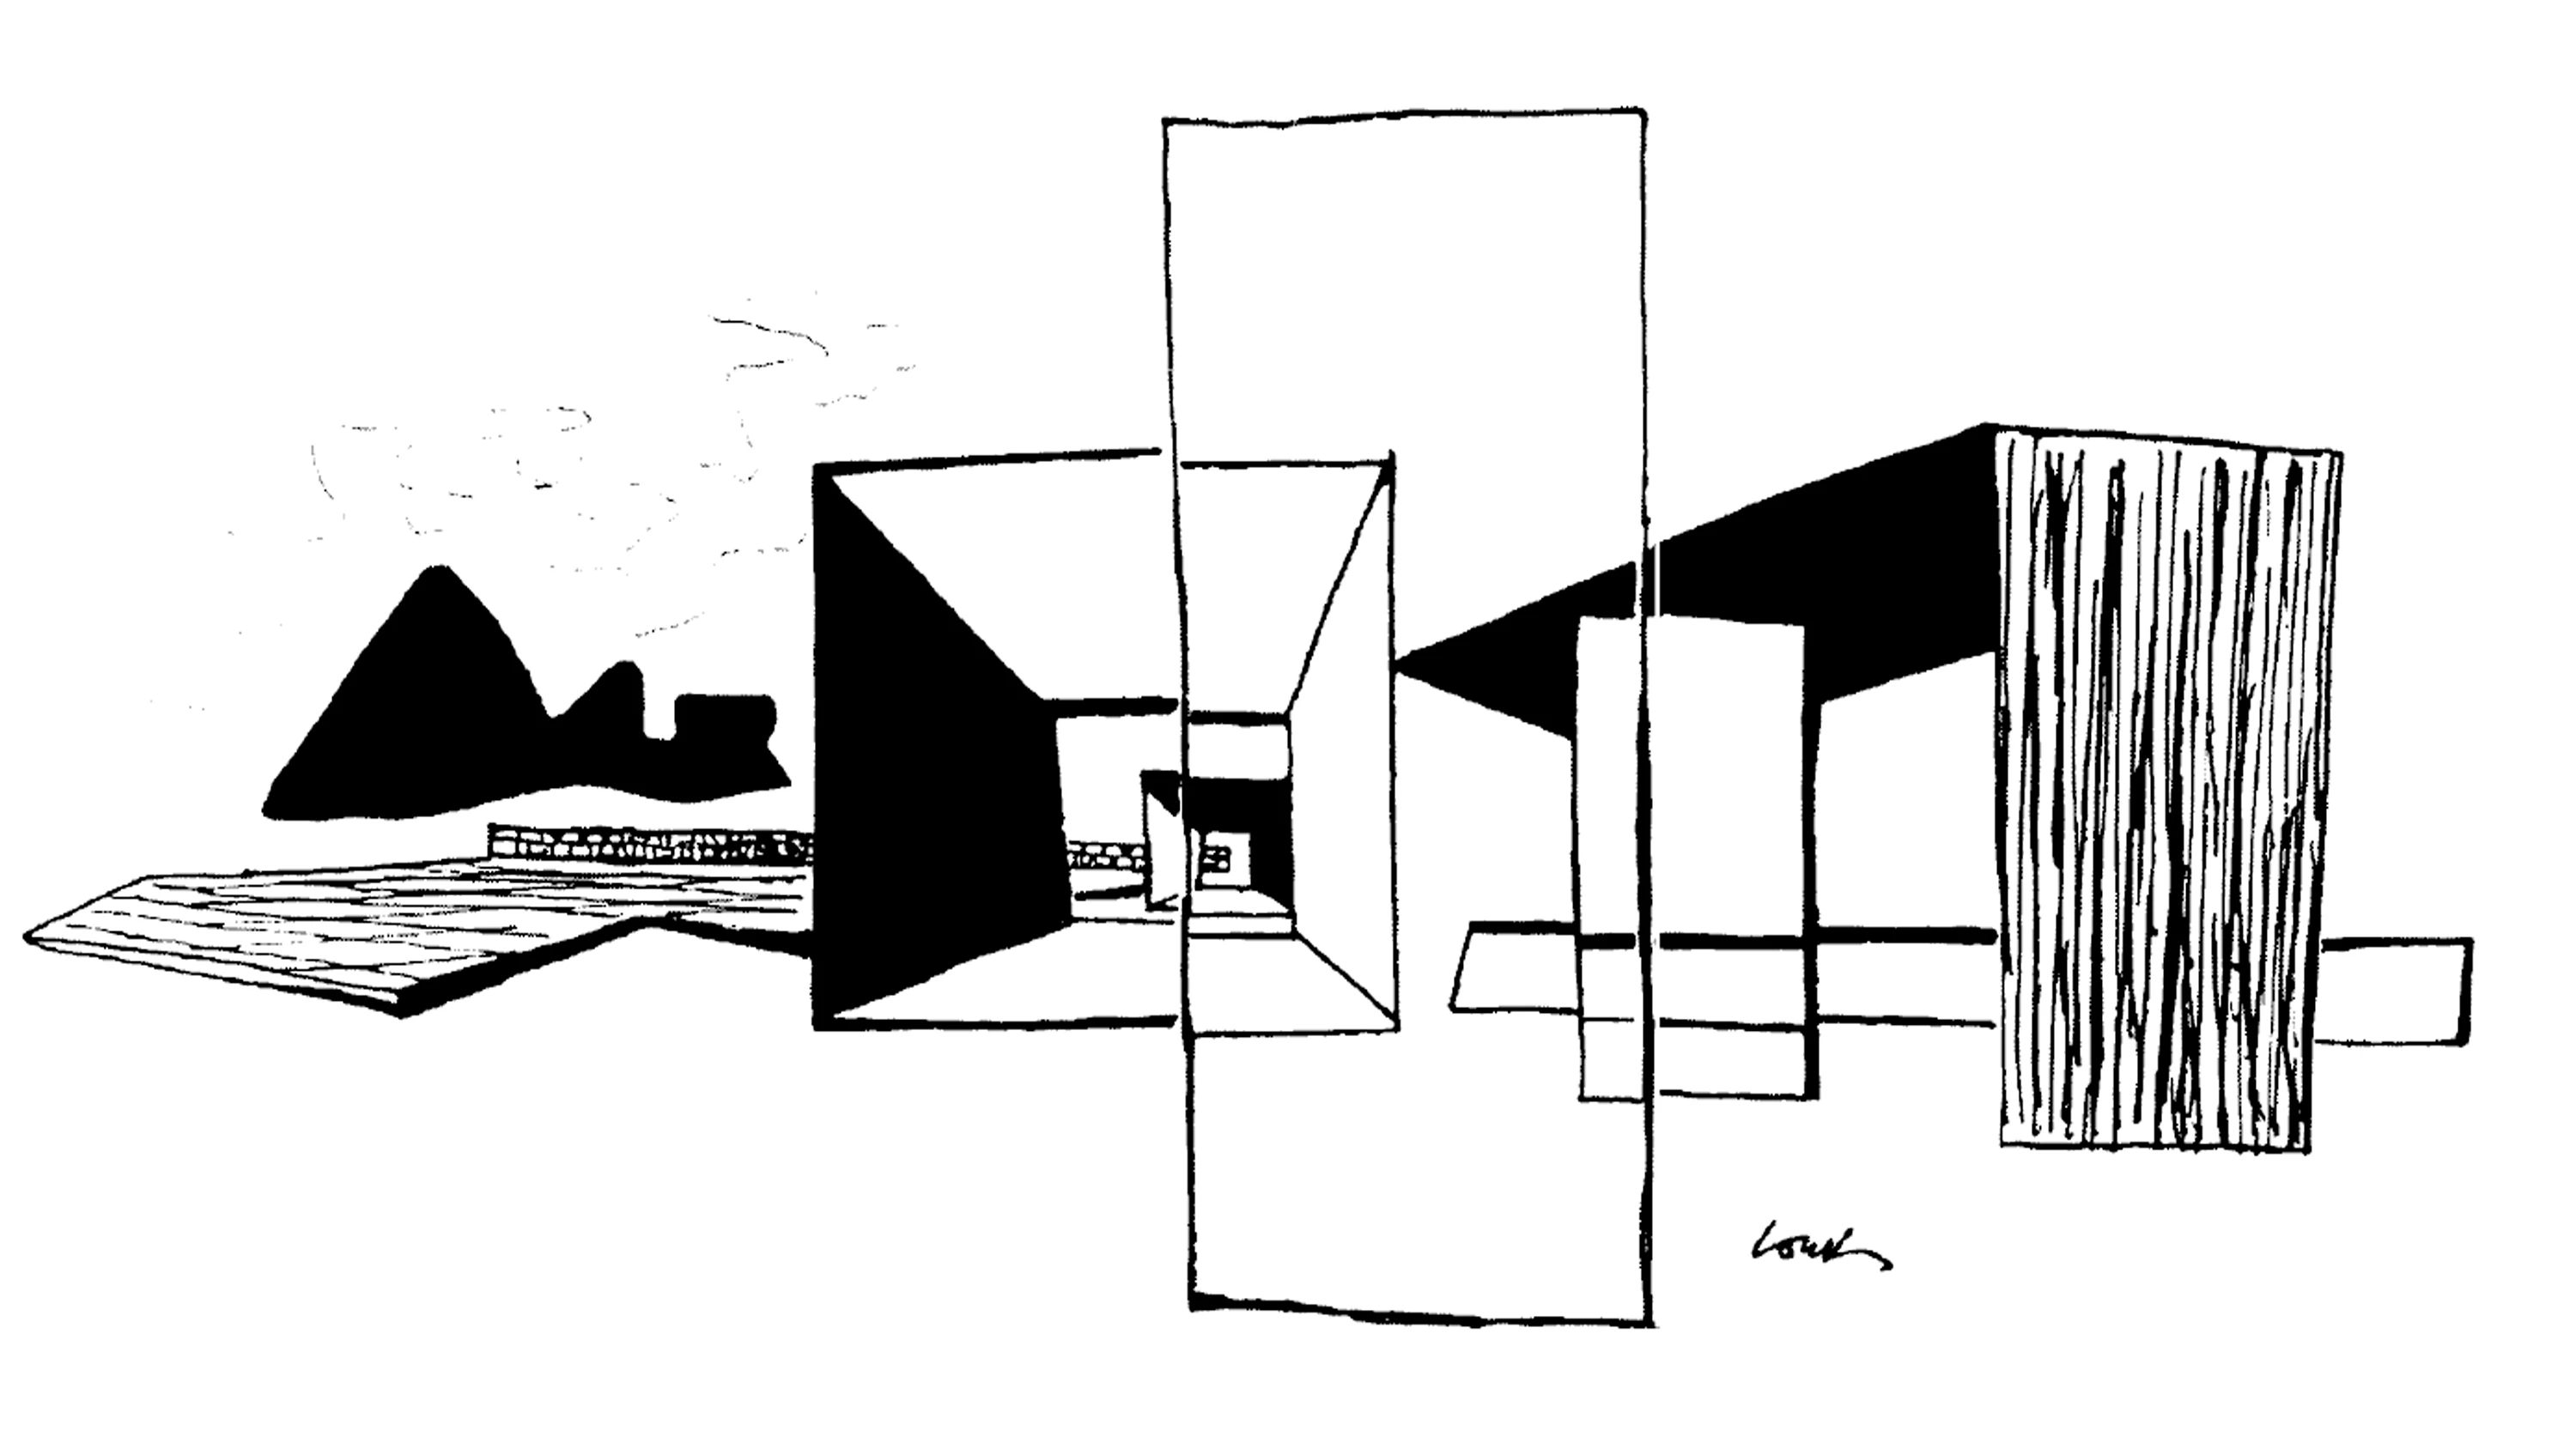 Kenneth Frampton on the evolution of Louis Kahn's Salk Institute